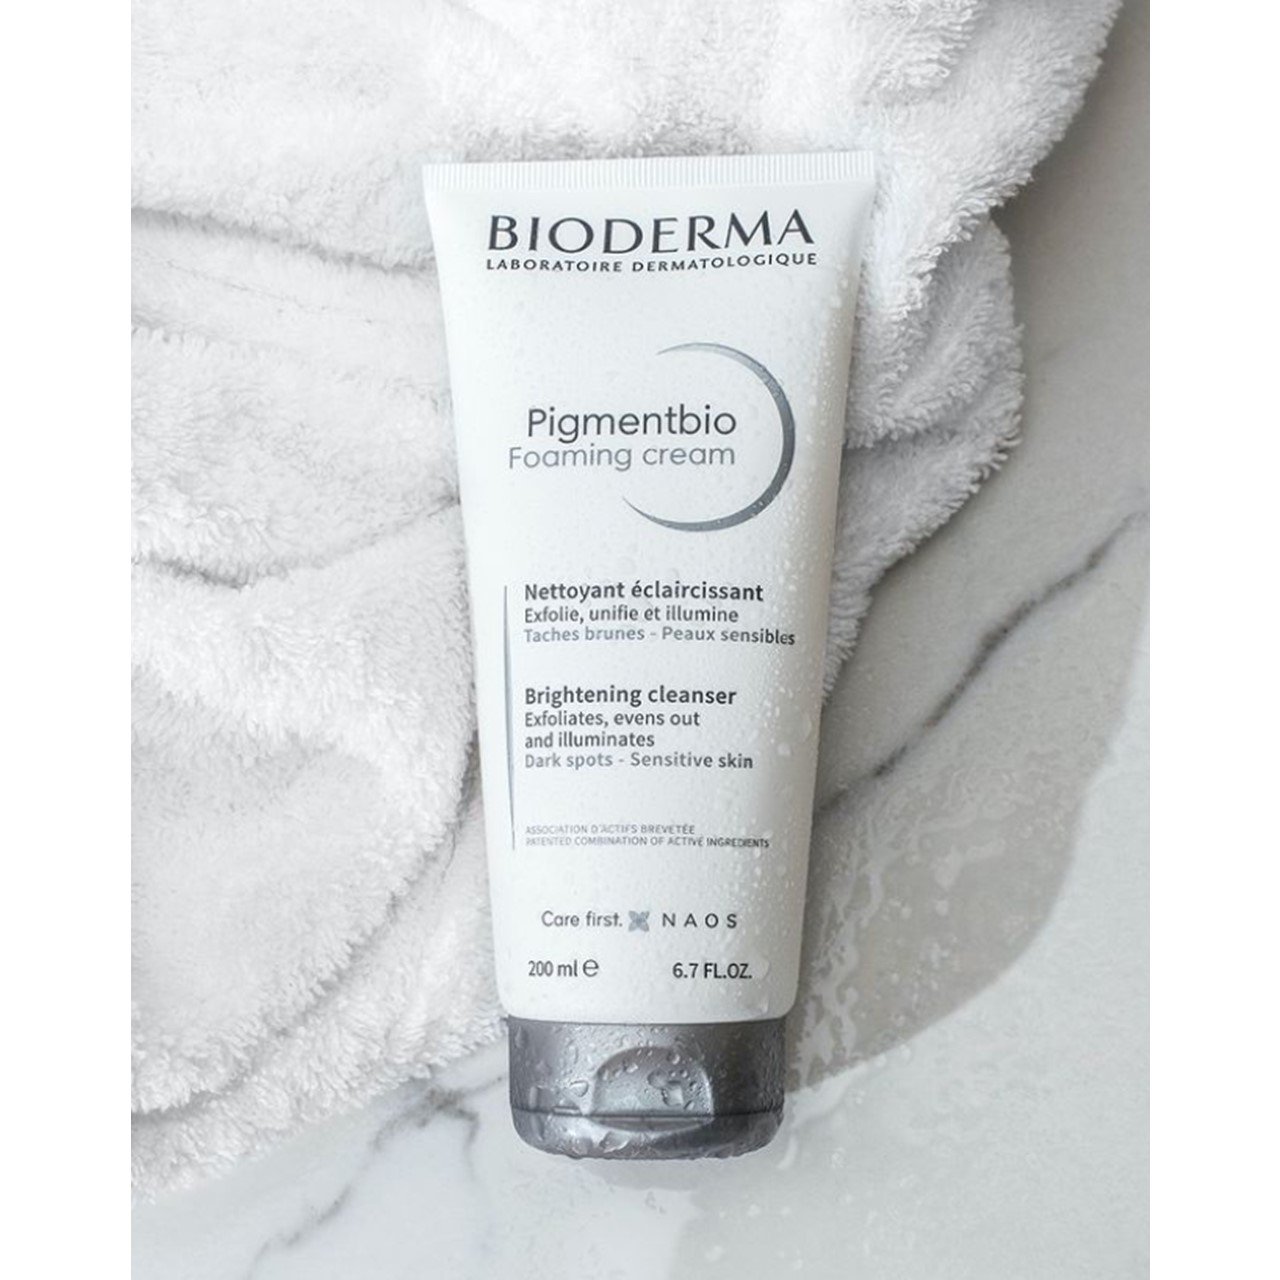 Bioderma Pigmentbio Foaming Cream 6.7fl.oz/200ml 